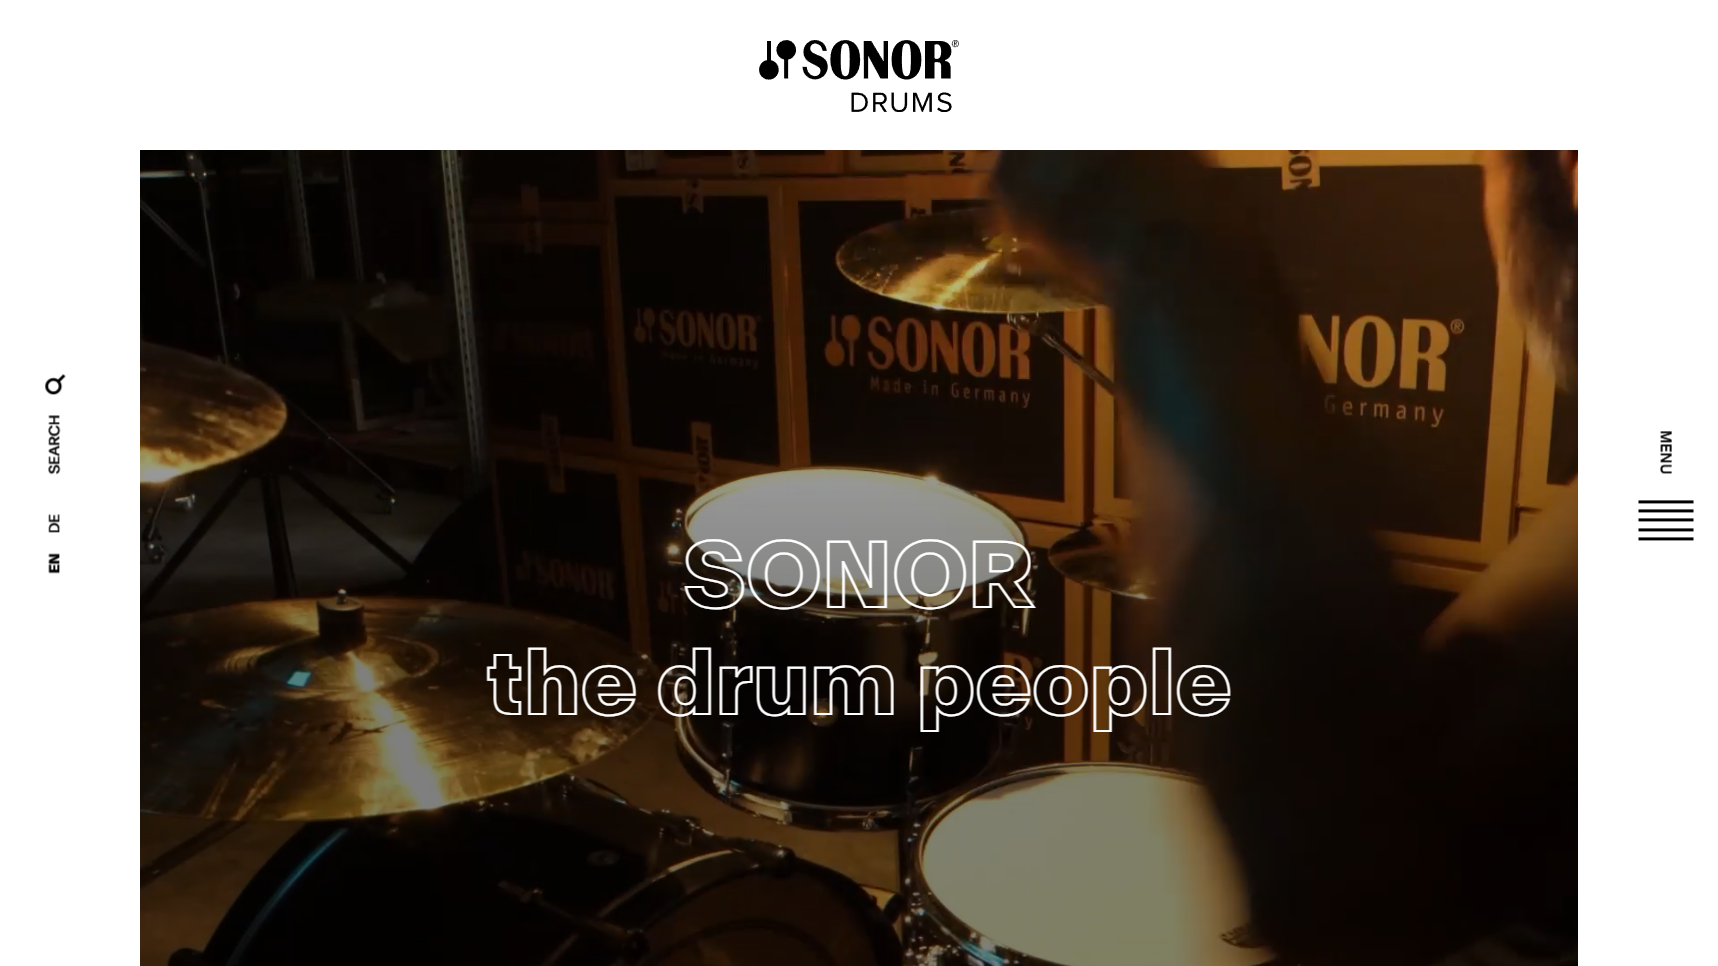 Sonor Drums - Drum Set Manufacturer